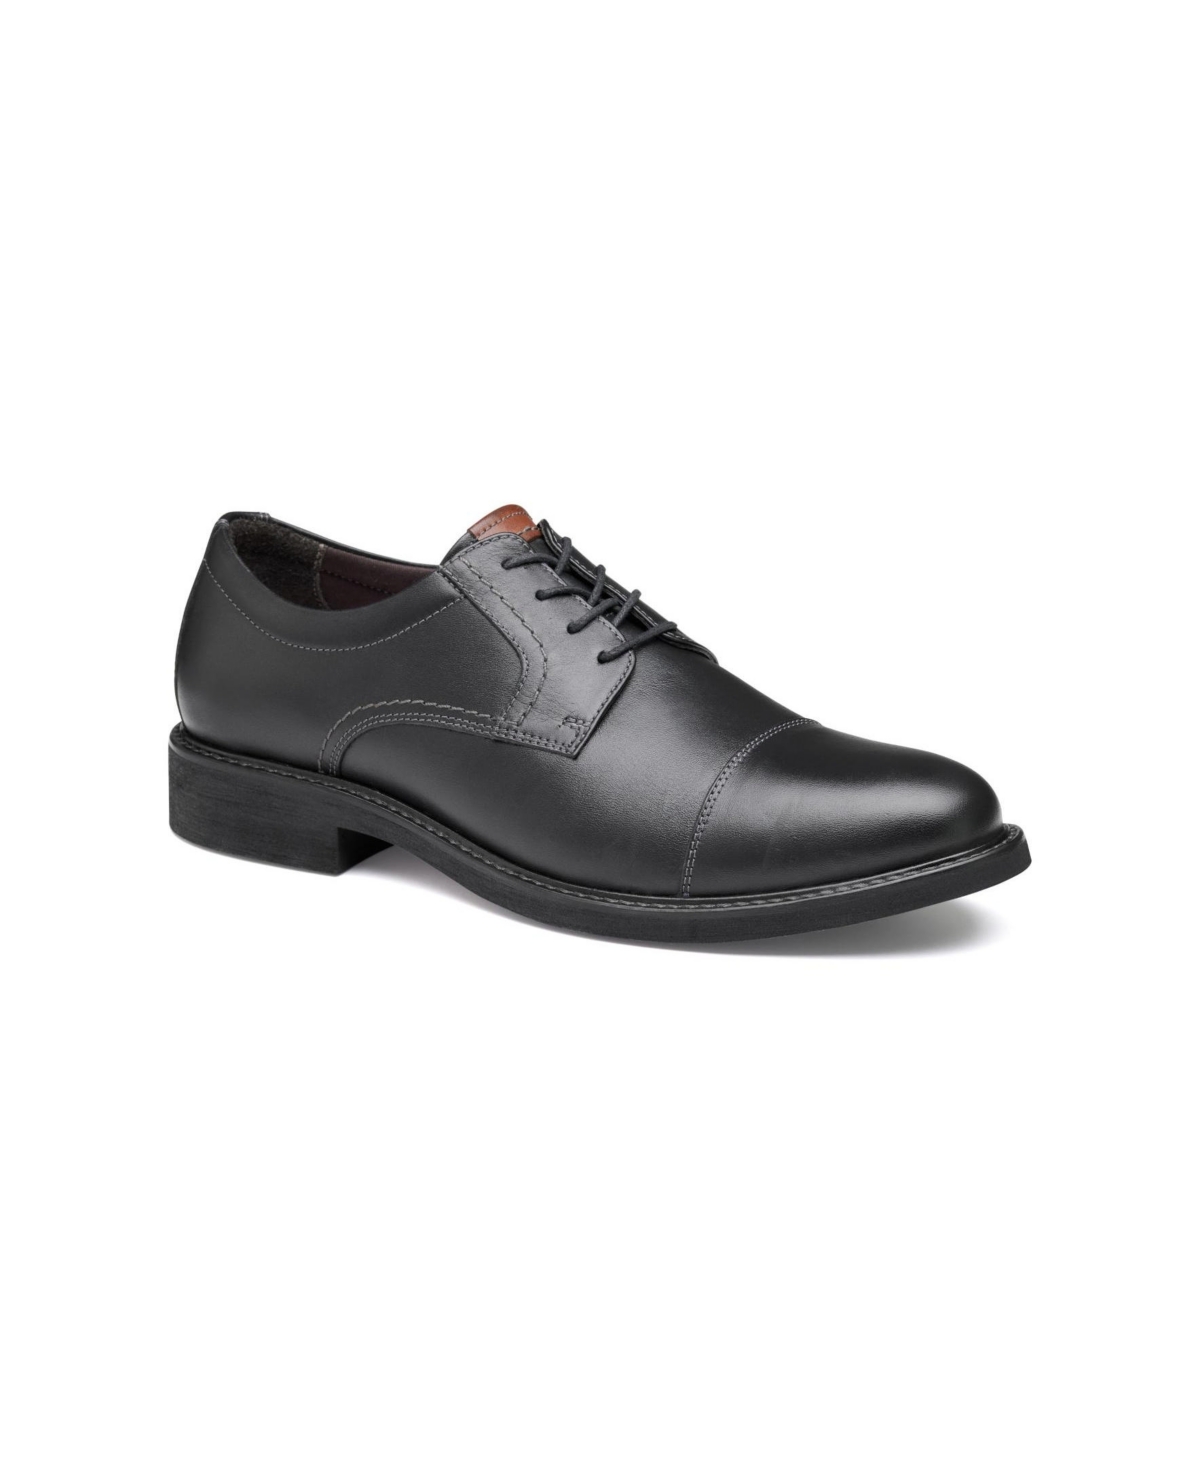 Johnston & Murphy Men's Beasley Leather Cap Toe Shoes In Black Full Grain Leather